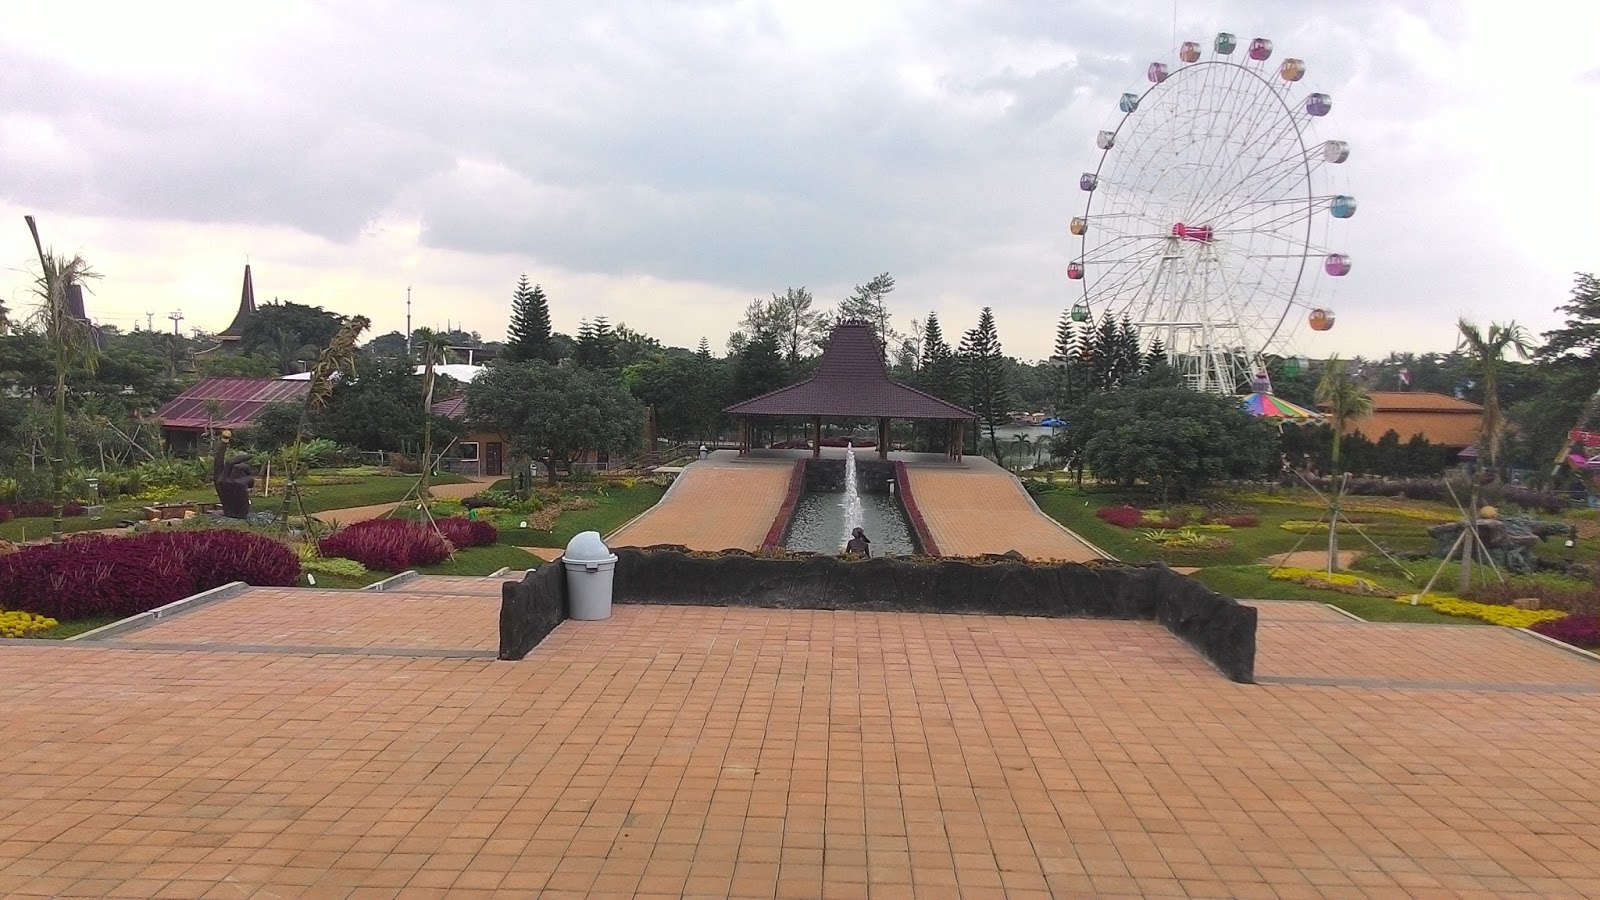 Taman Legenda Keong Mas